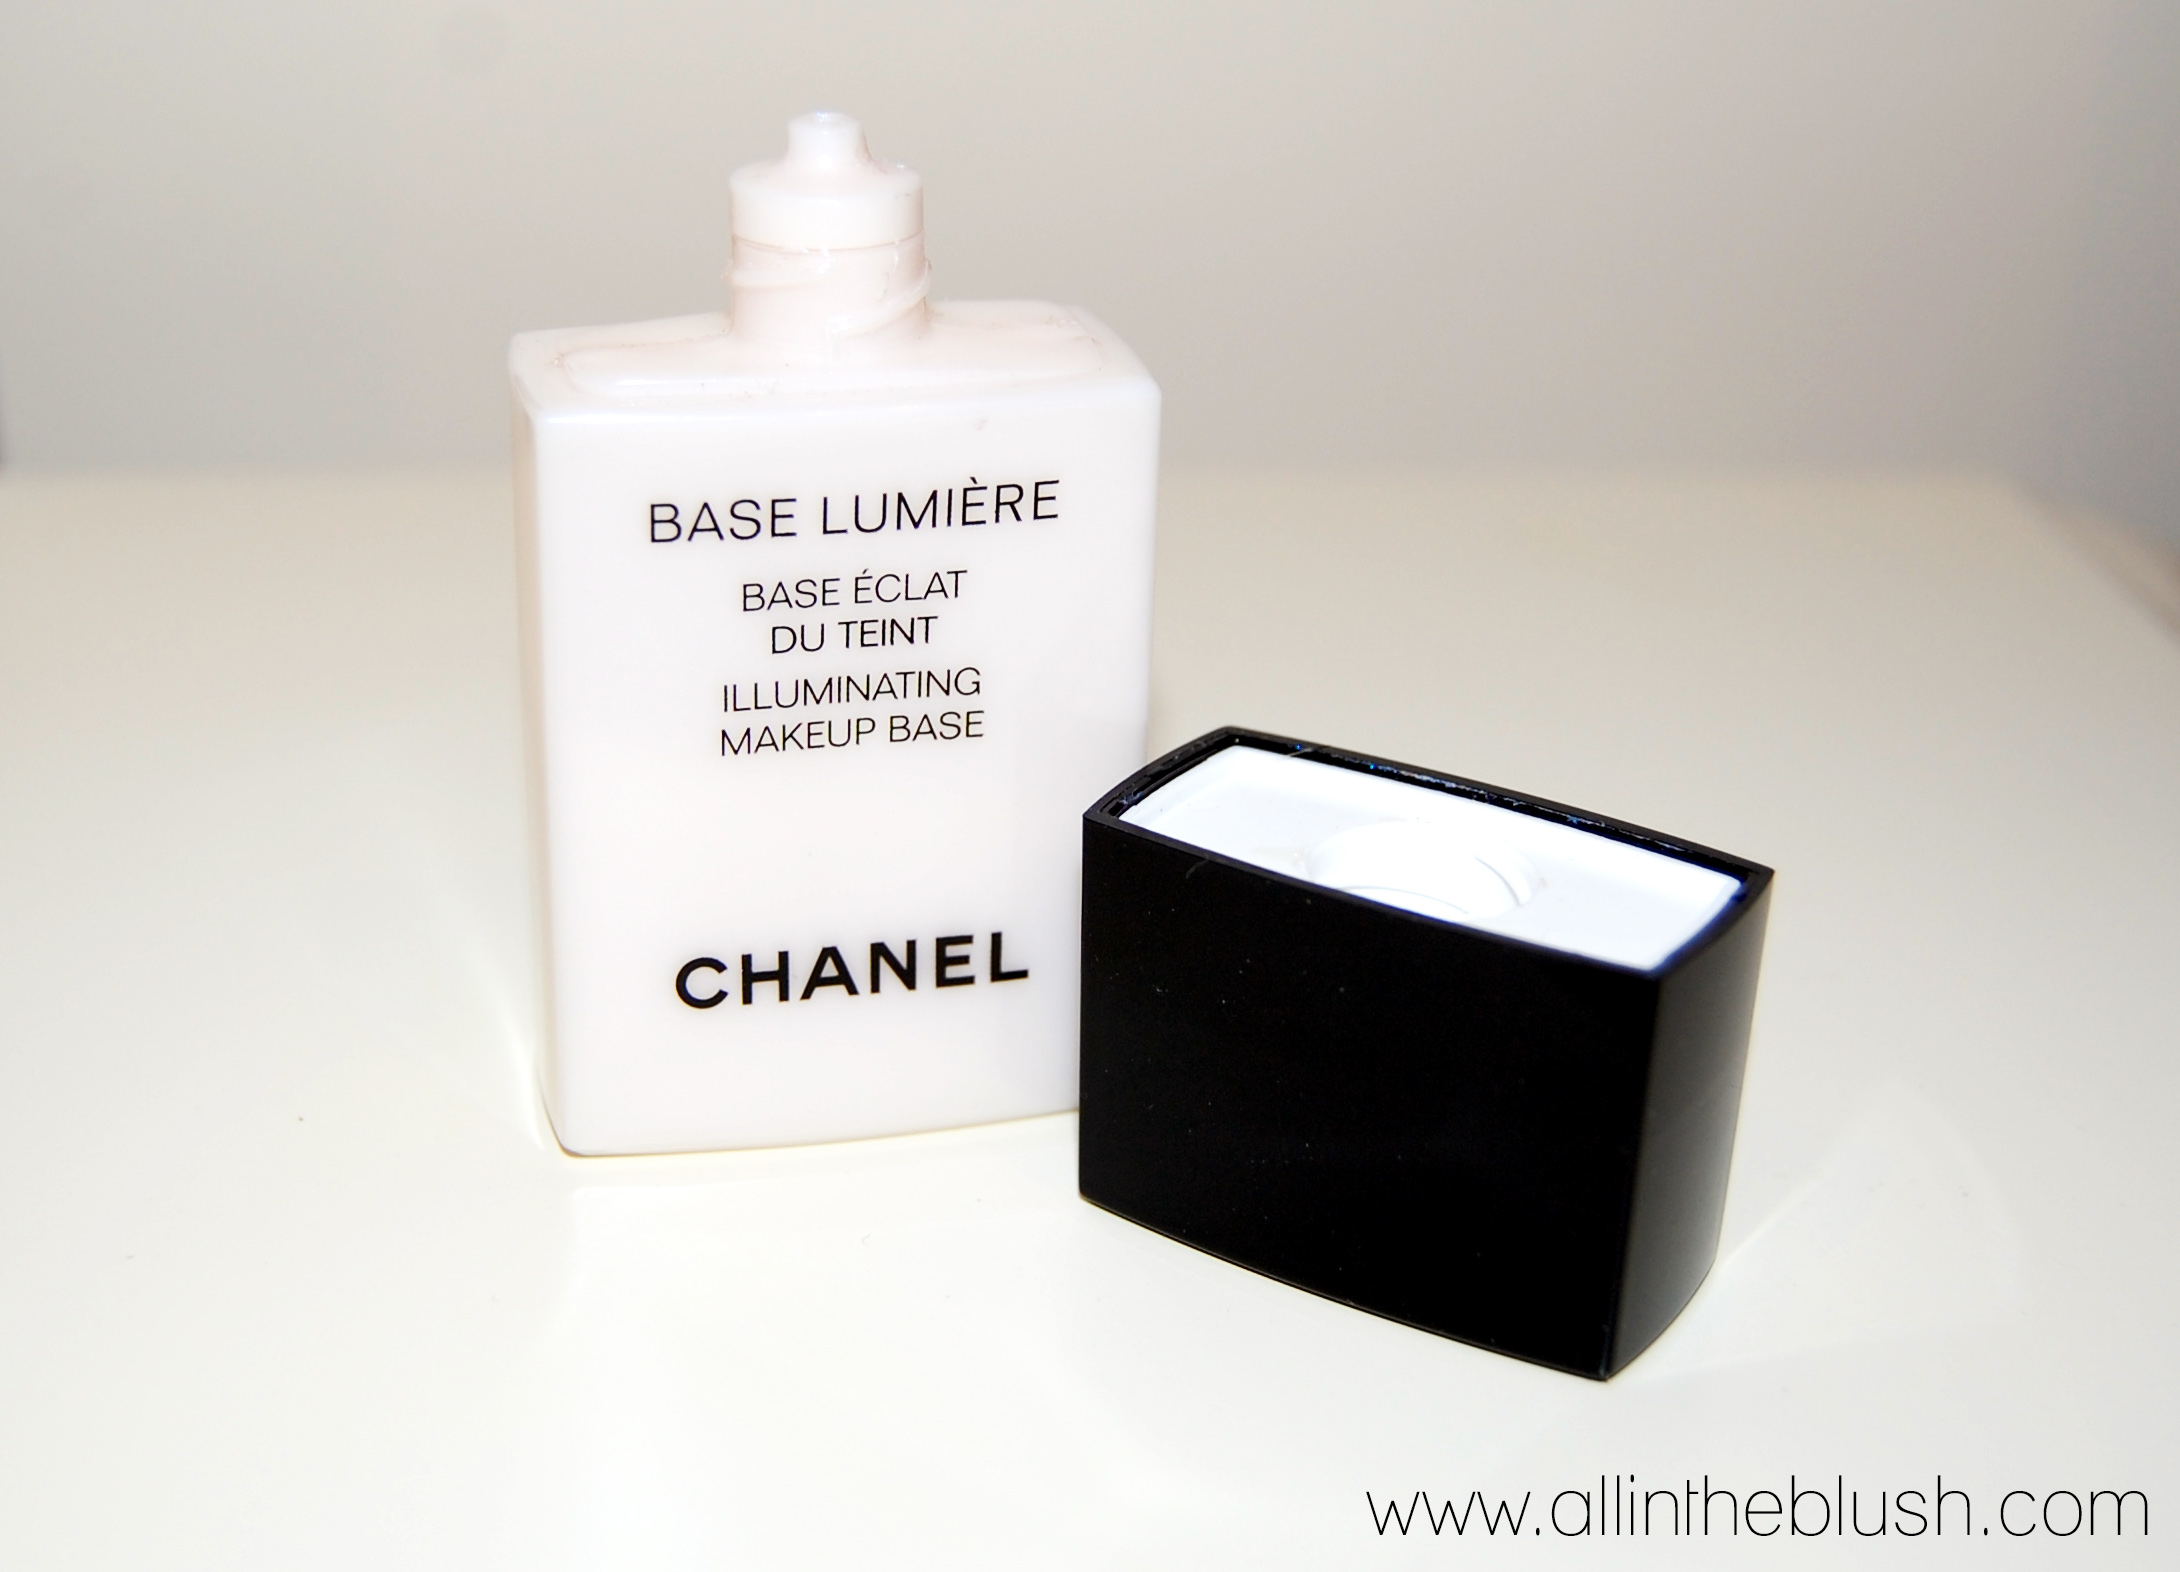 Chanel makeup base review